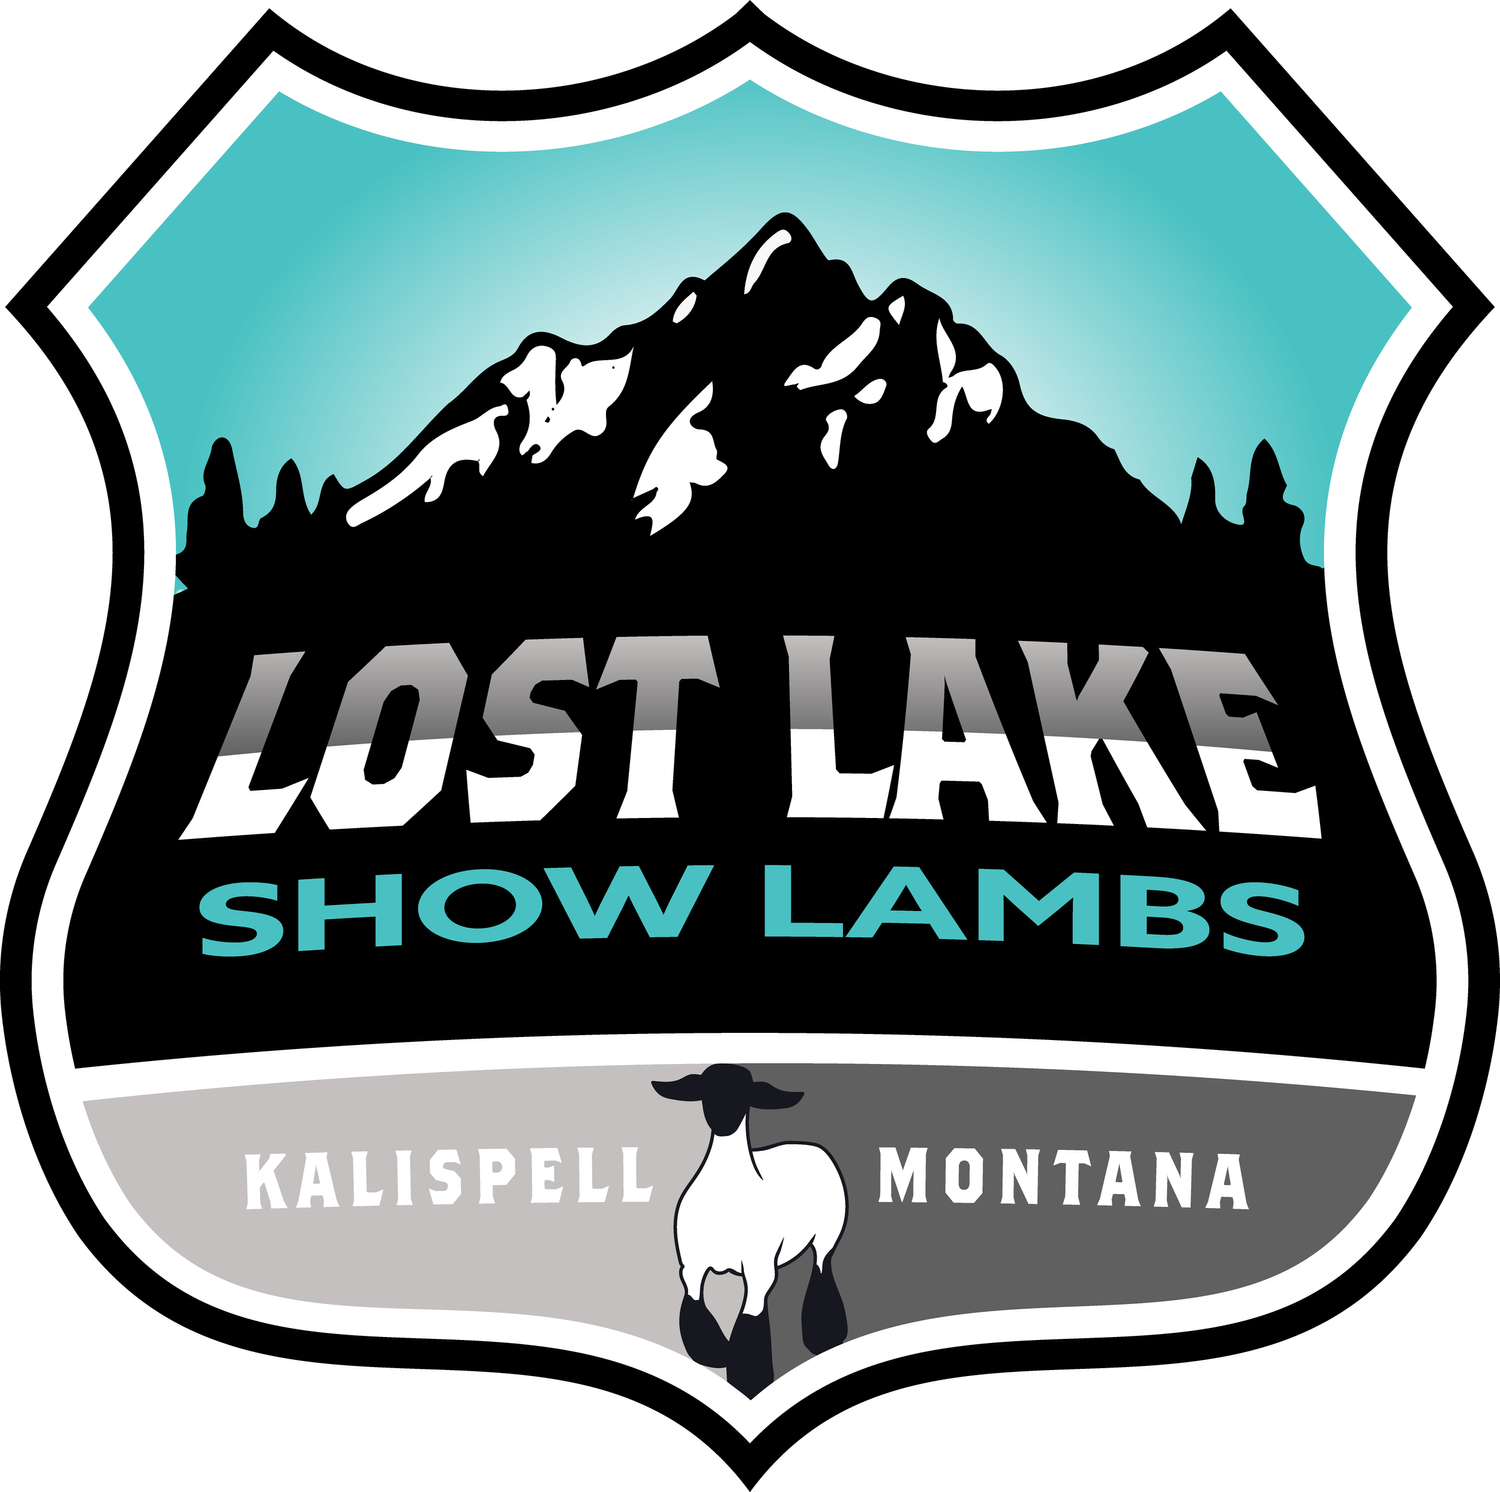 Lost Lake Show Lambs